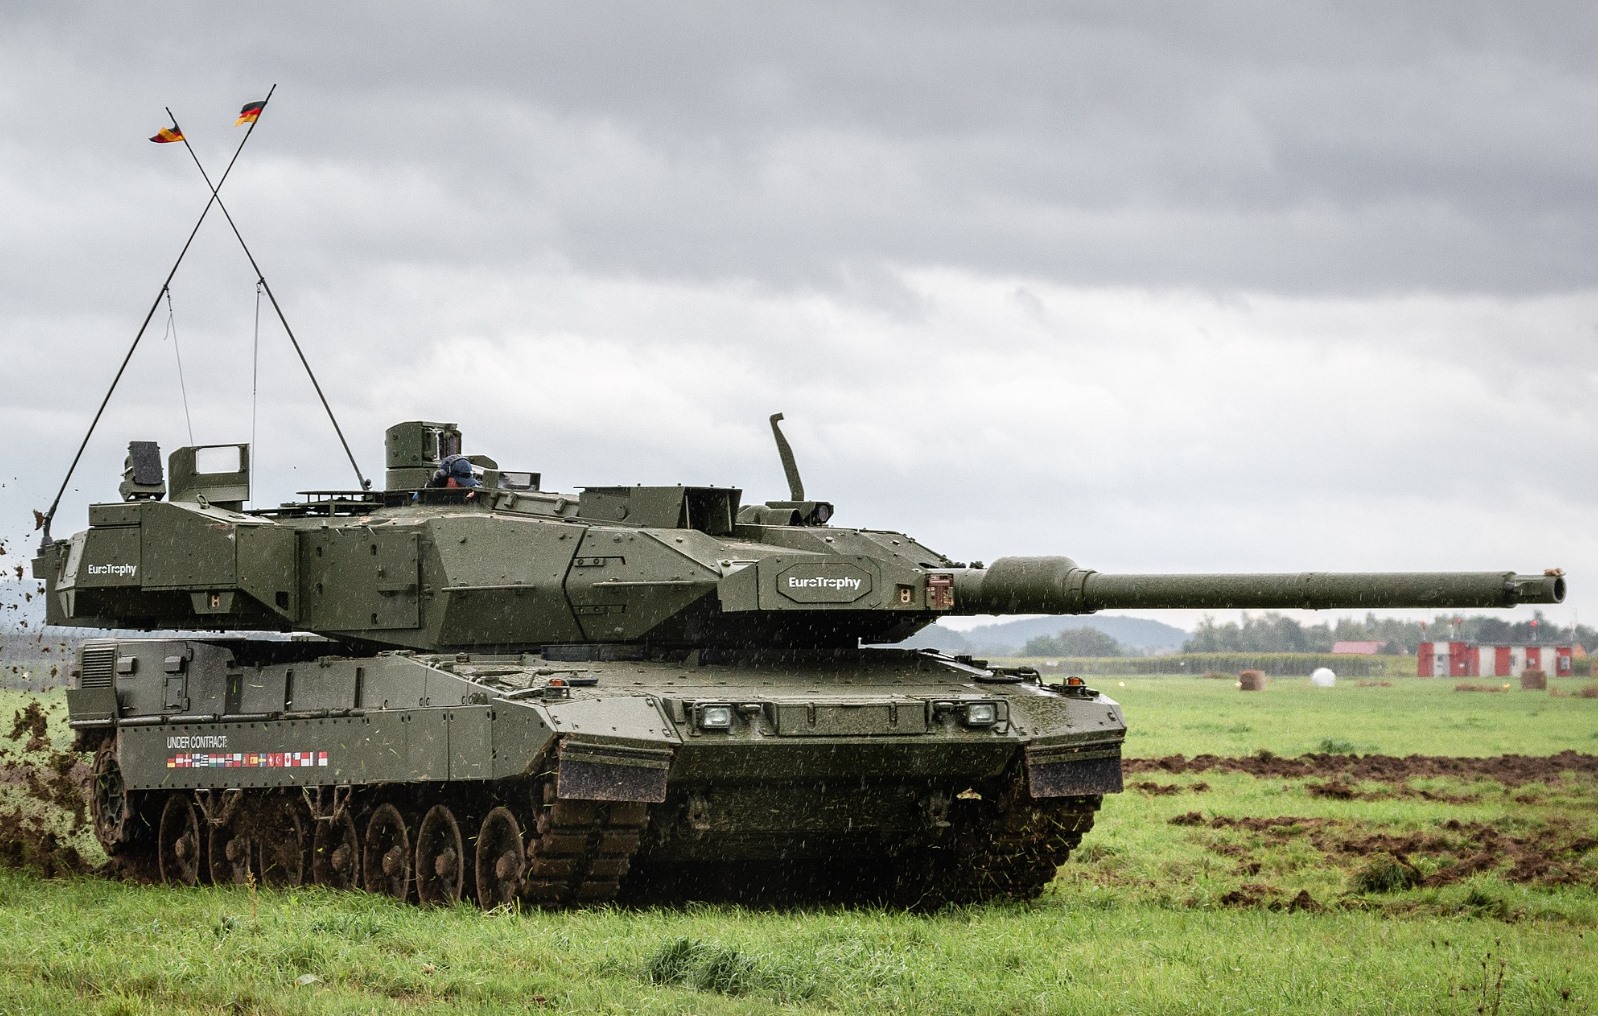 Đức cam kết cung cấp xe tăng Leopard 2 cho Ukraina. Ảnh: Wiki